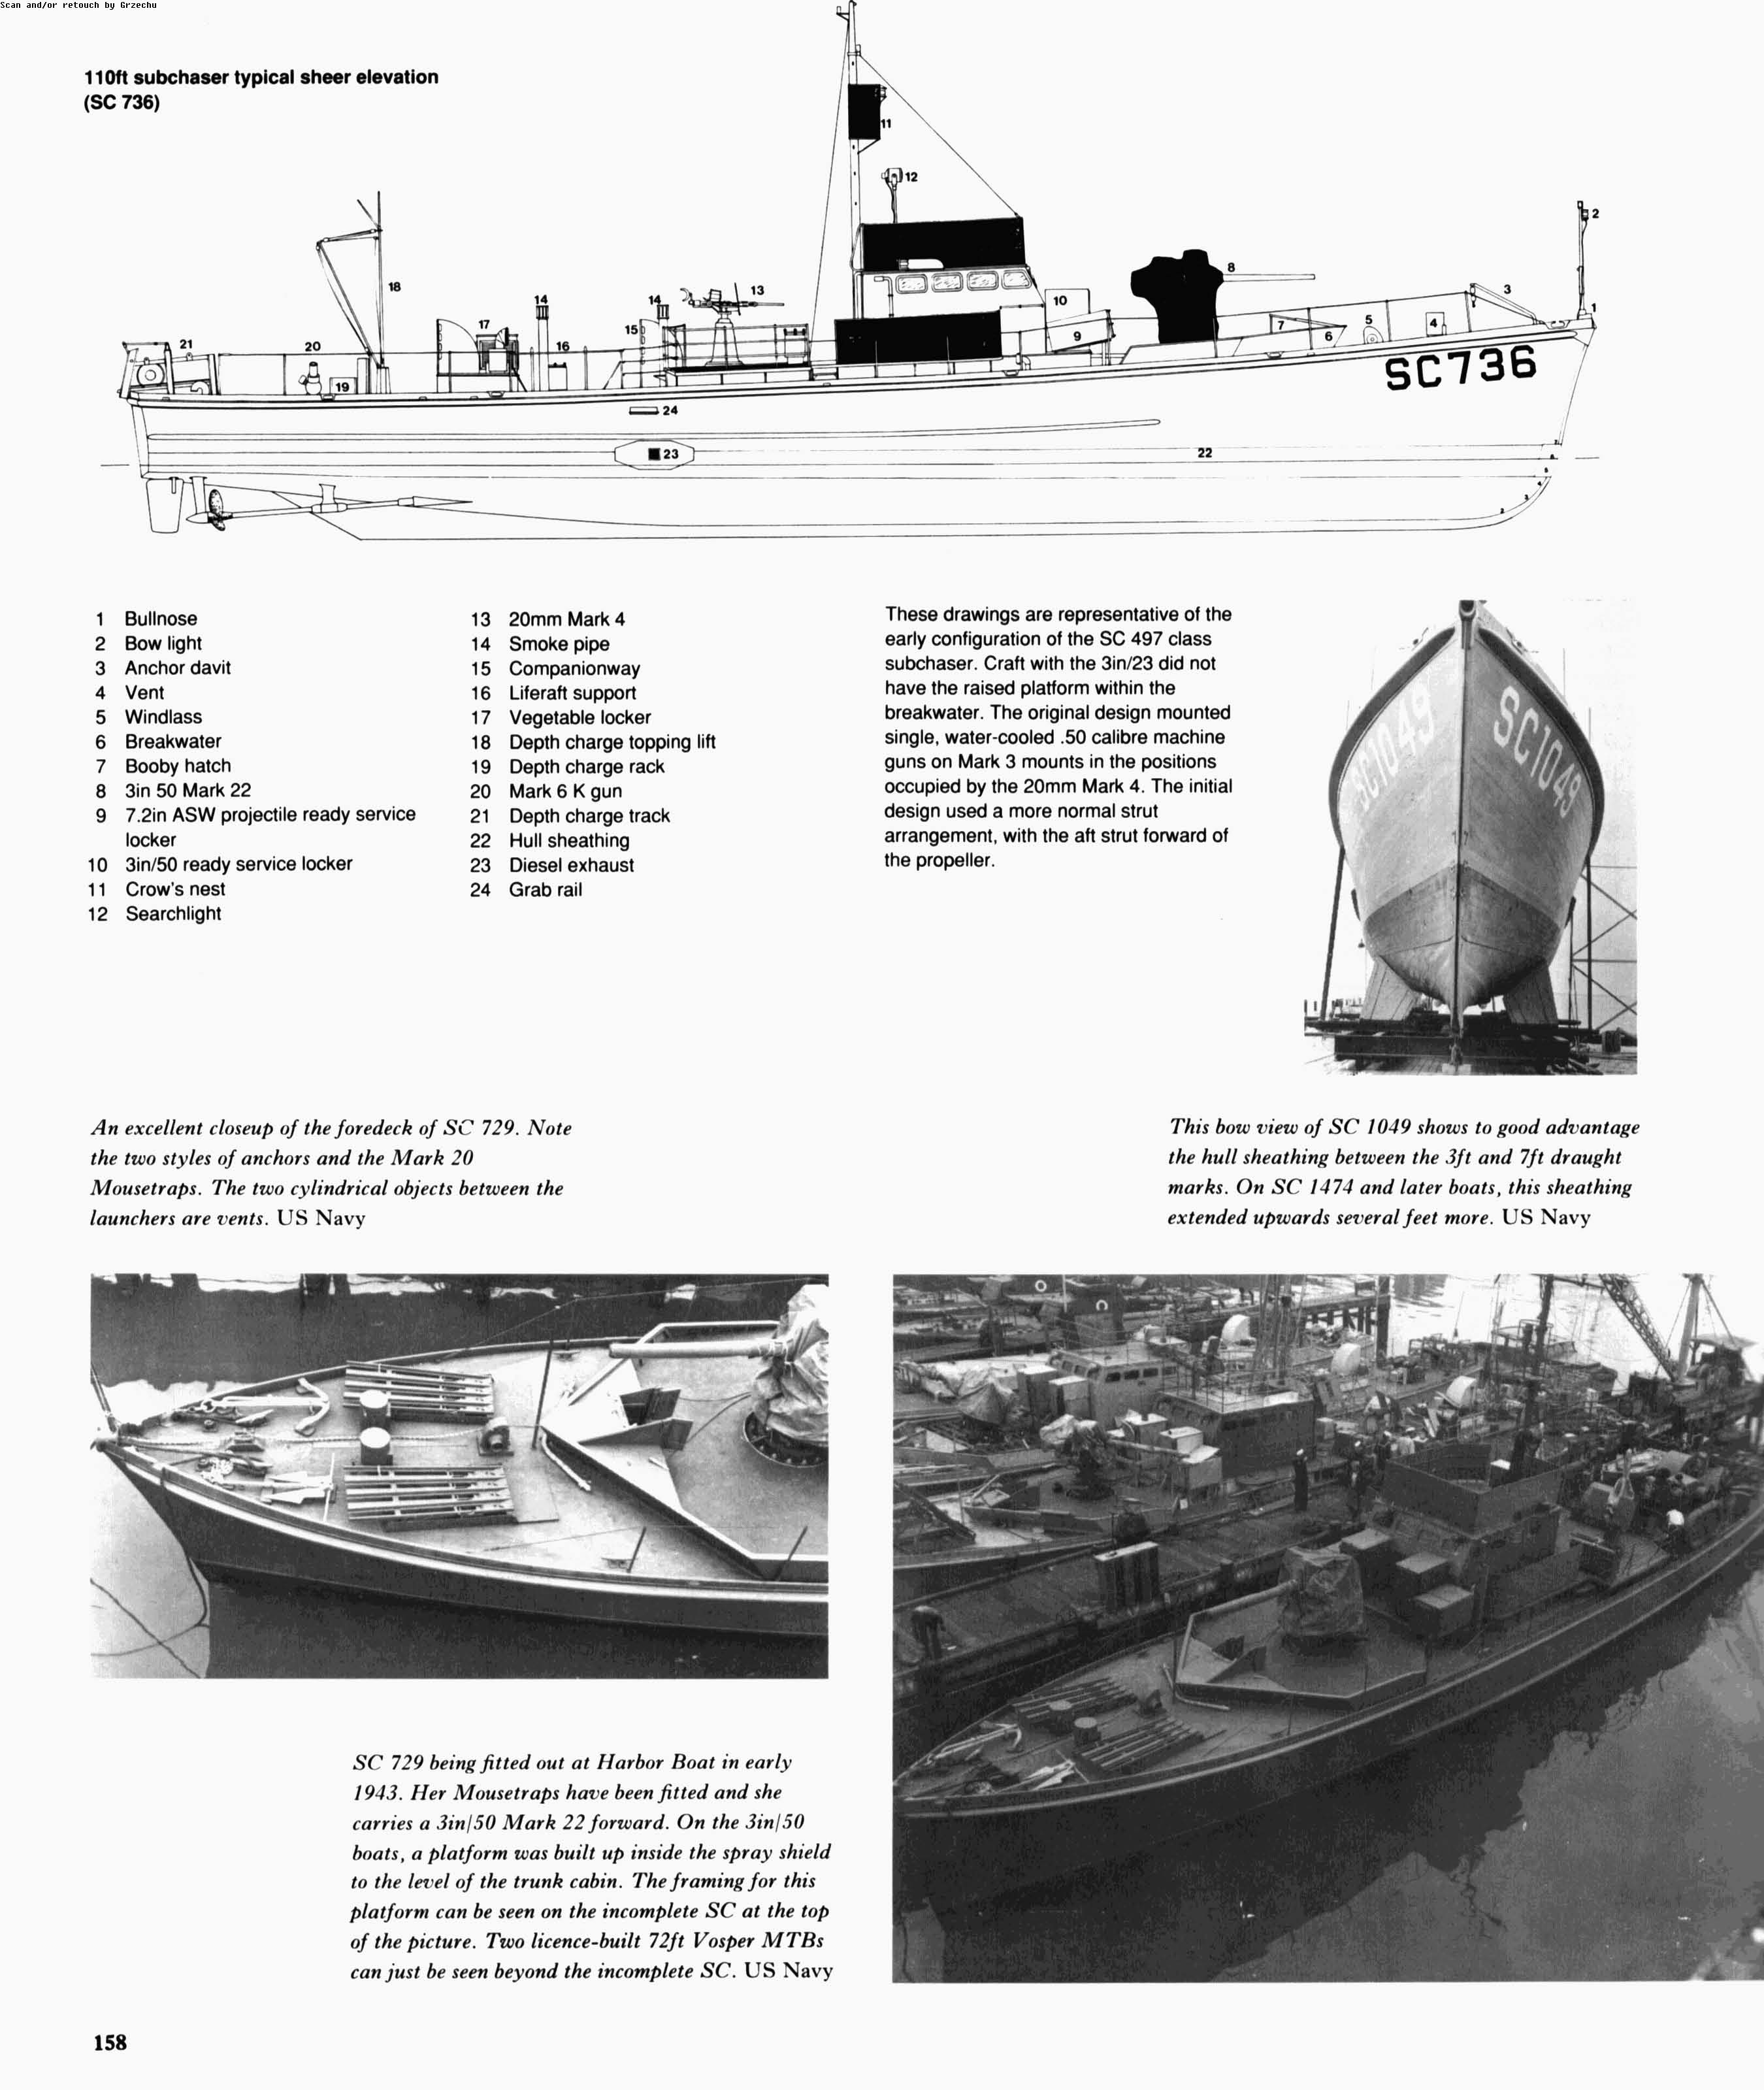 Allied Coastal Forces of World War II (1) Fairmile designs & U.S. submarine chasers_Page_160.jpg